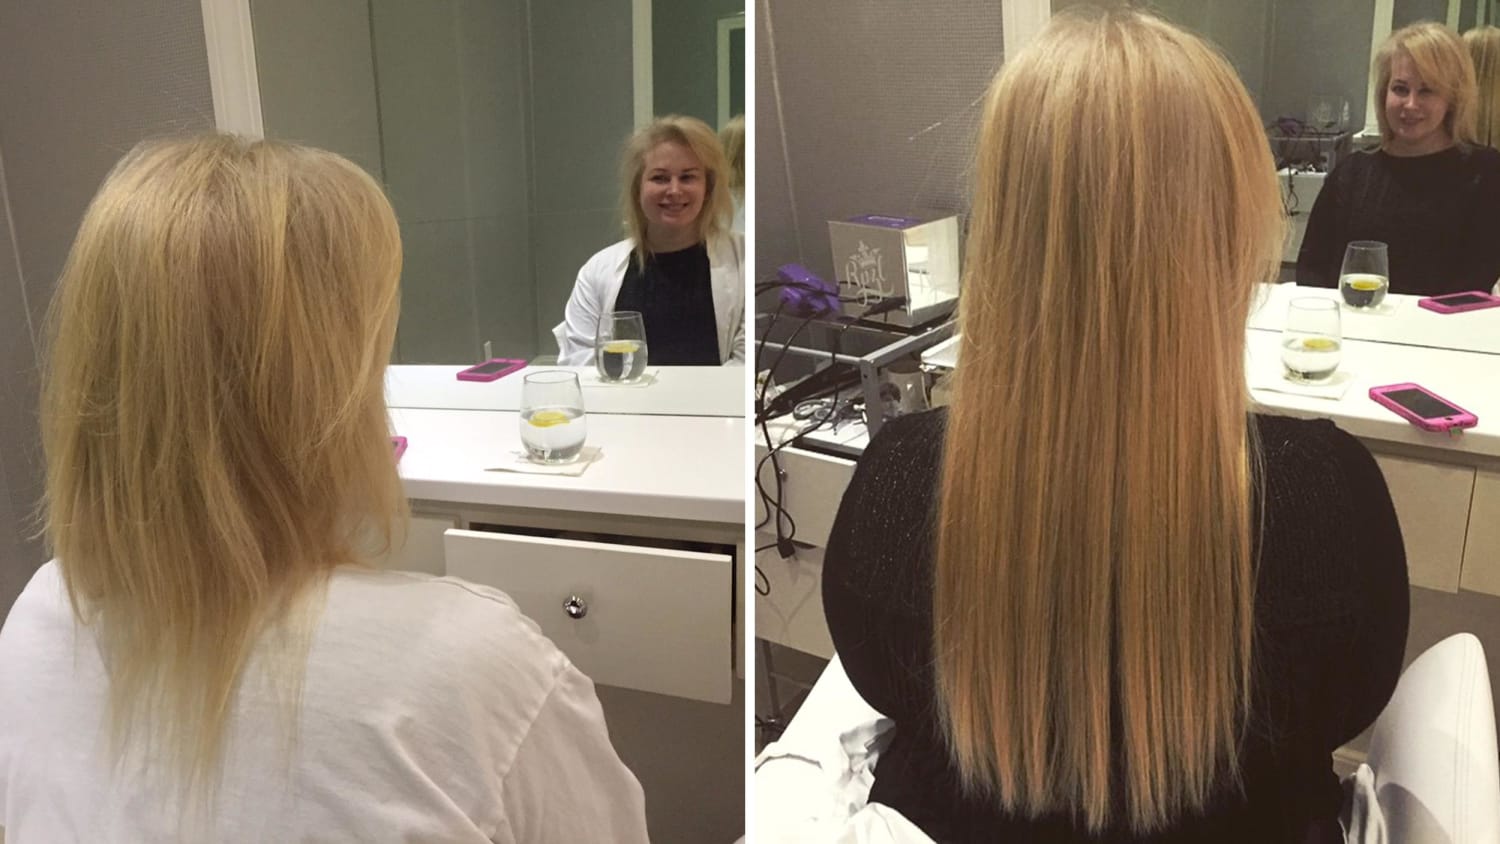 The world's first hair extension salon saves Rapunzel wannabes everywhere